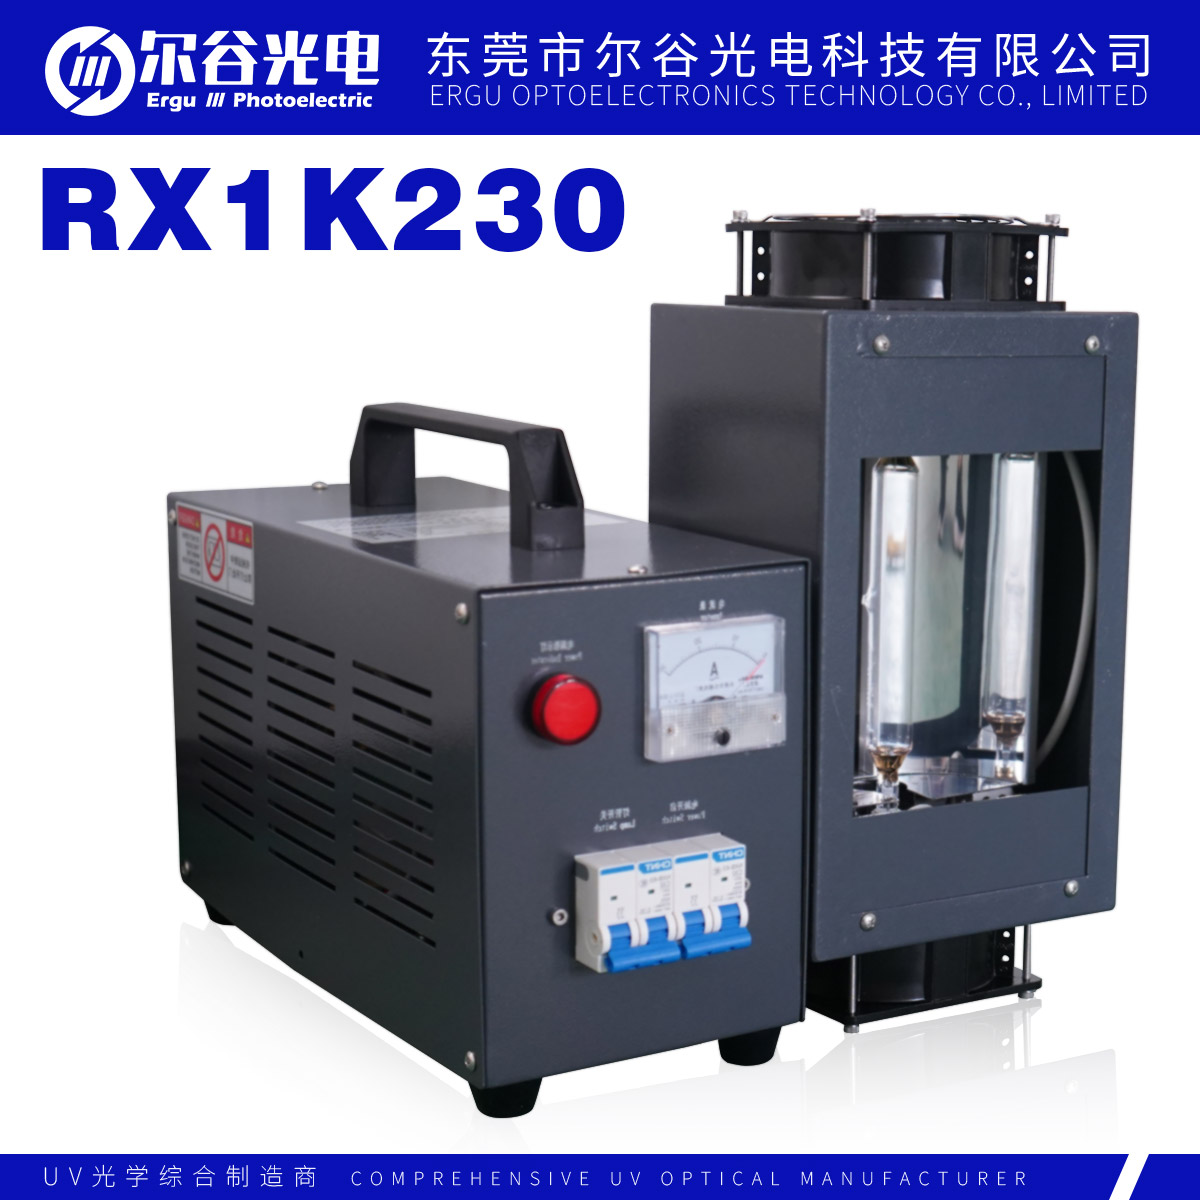 RX1KW230 手提式UV固